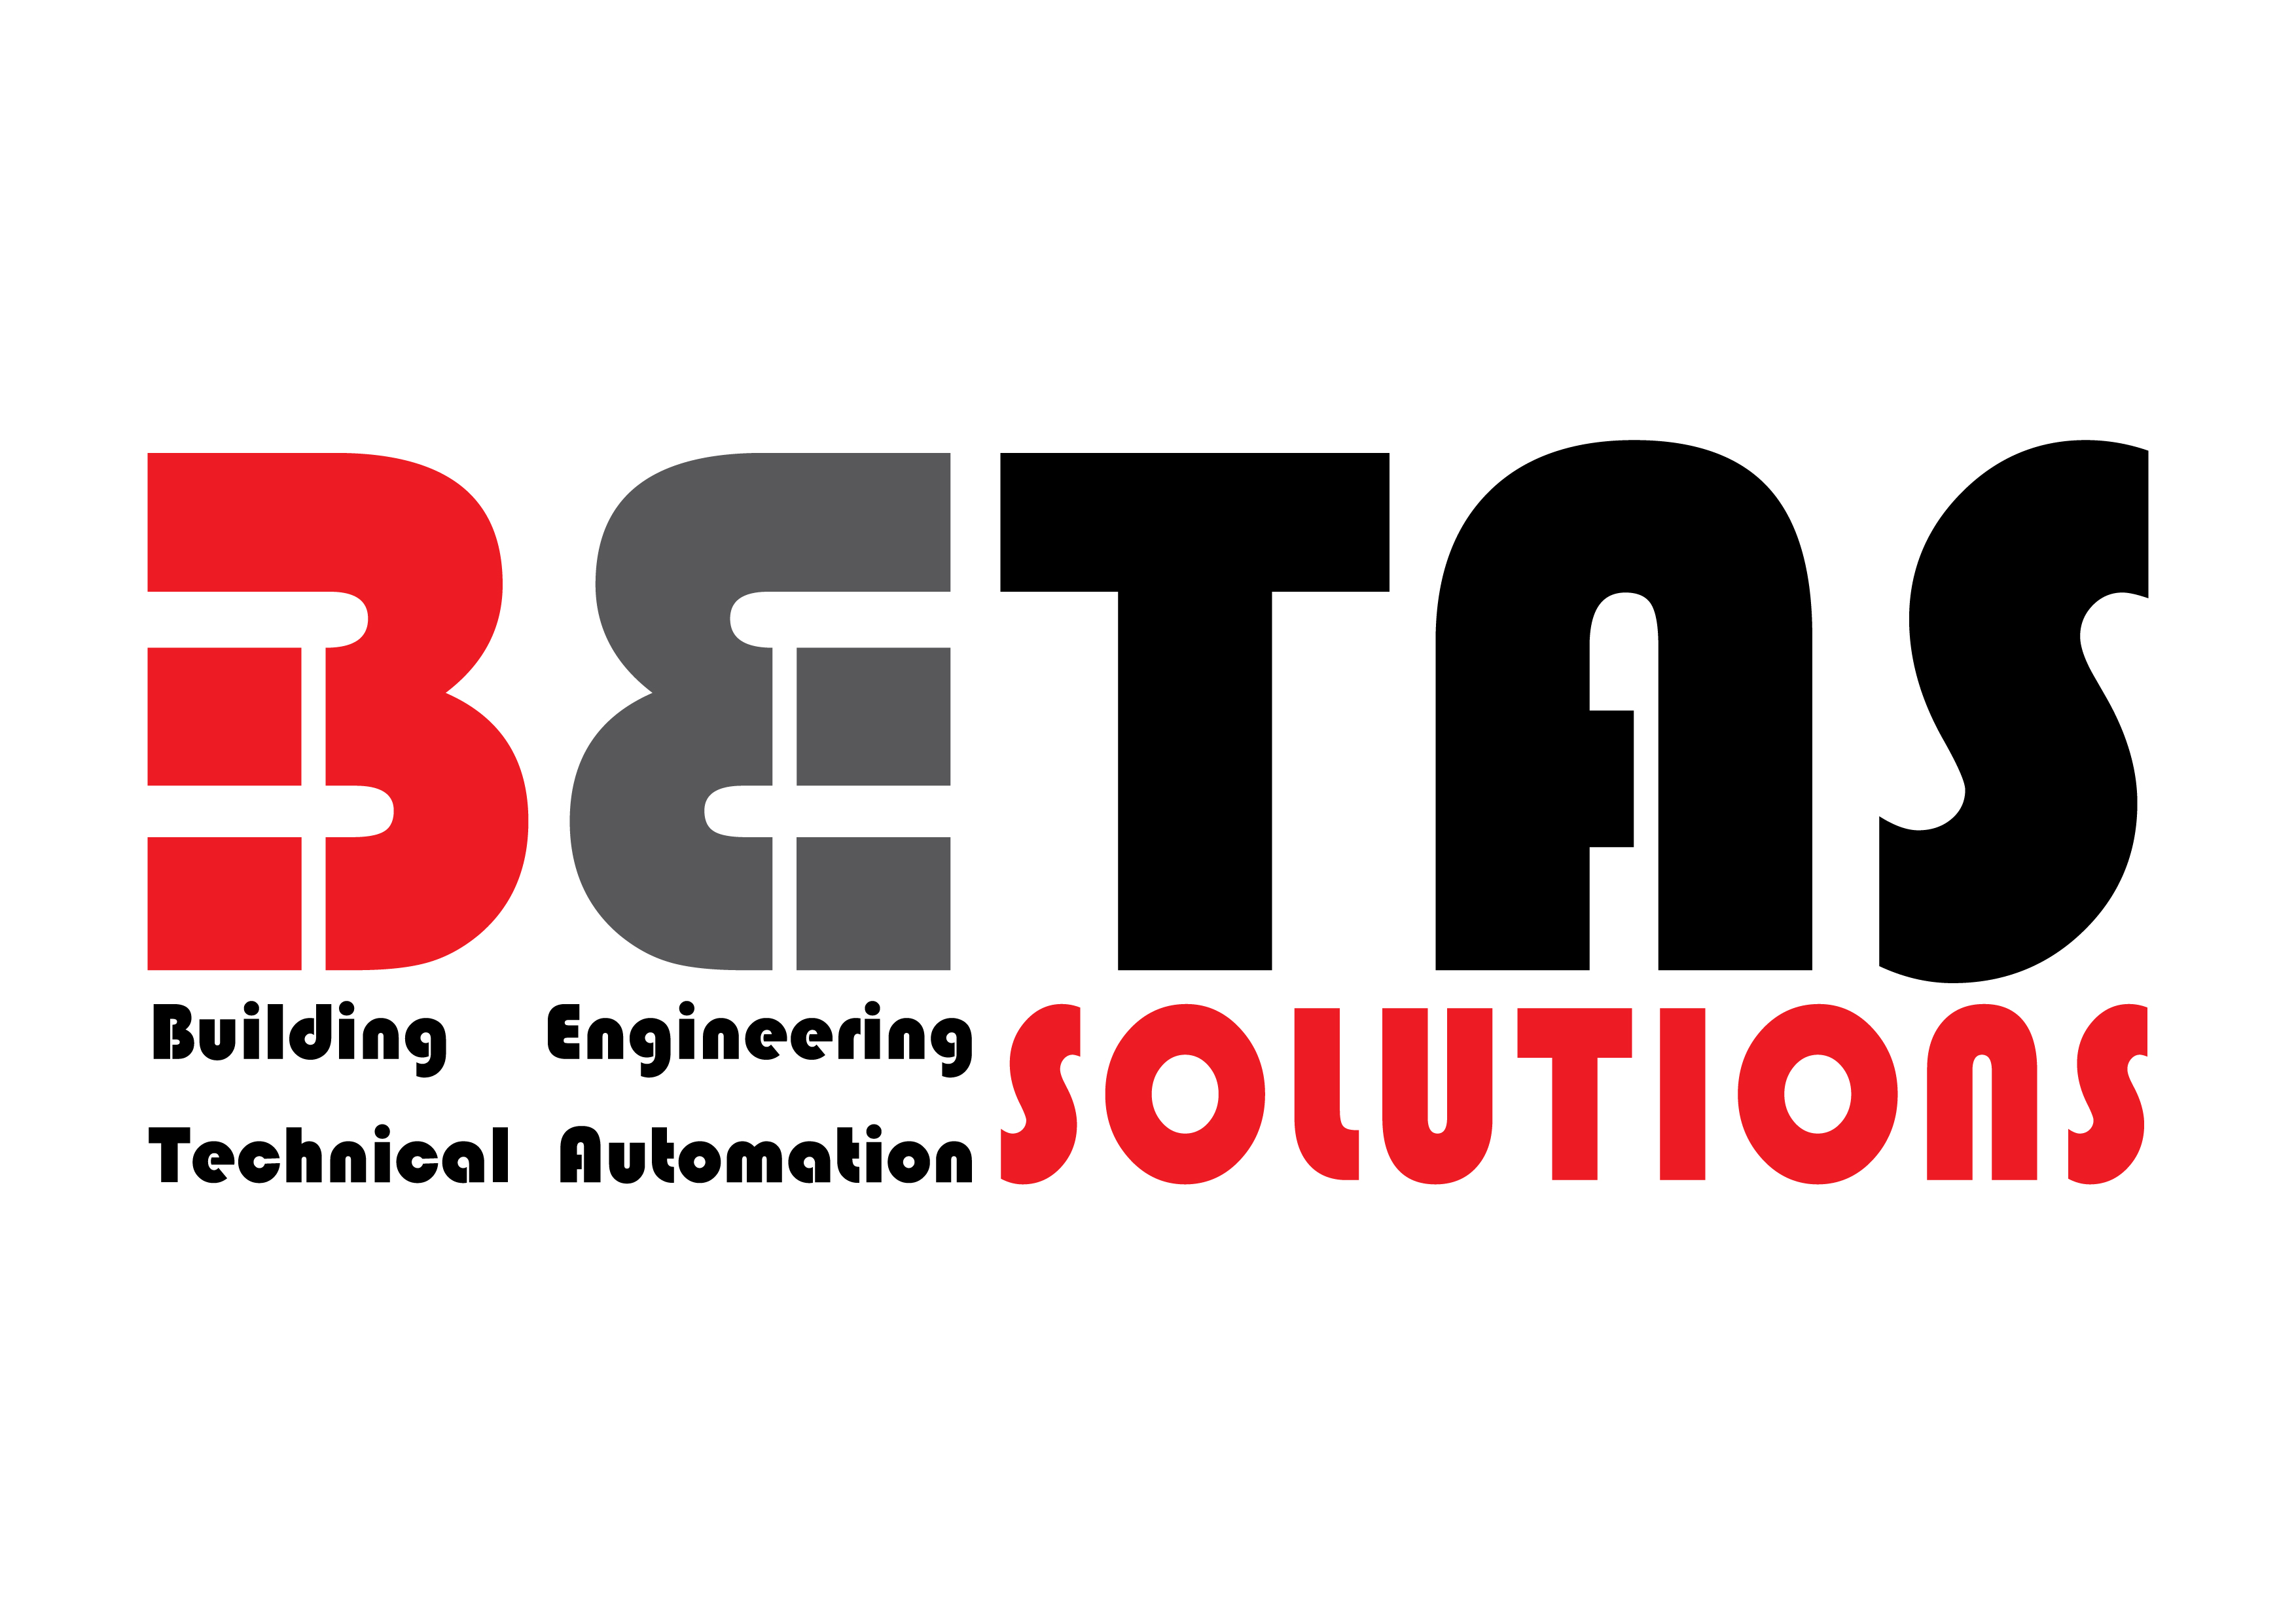 Betas Solutions